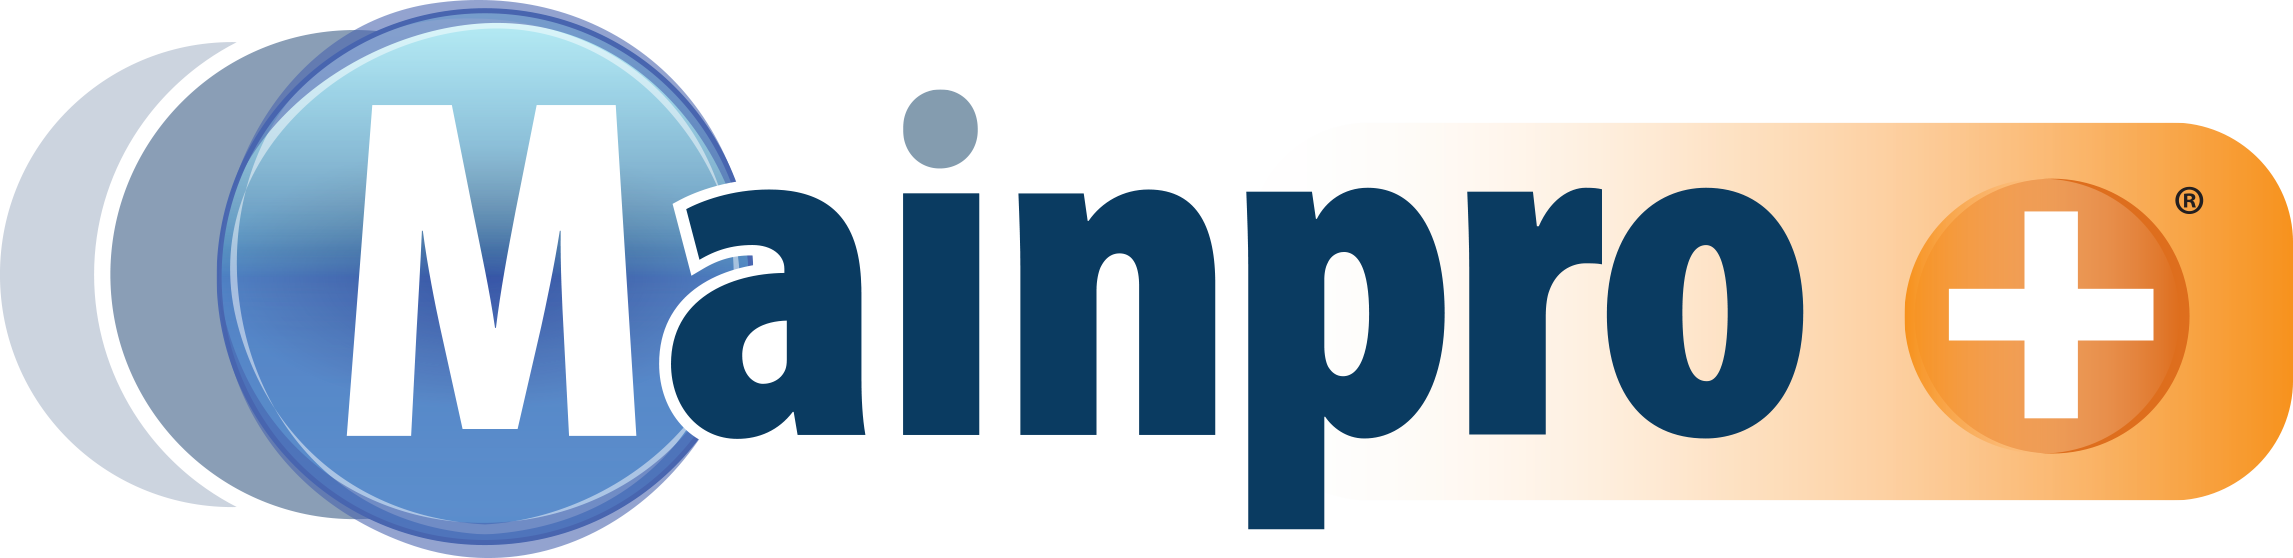 Mainpro Plus logo final R